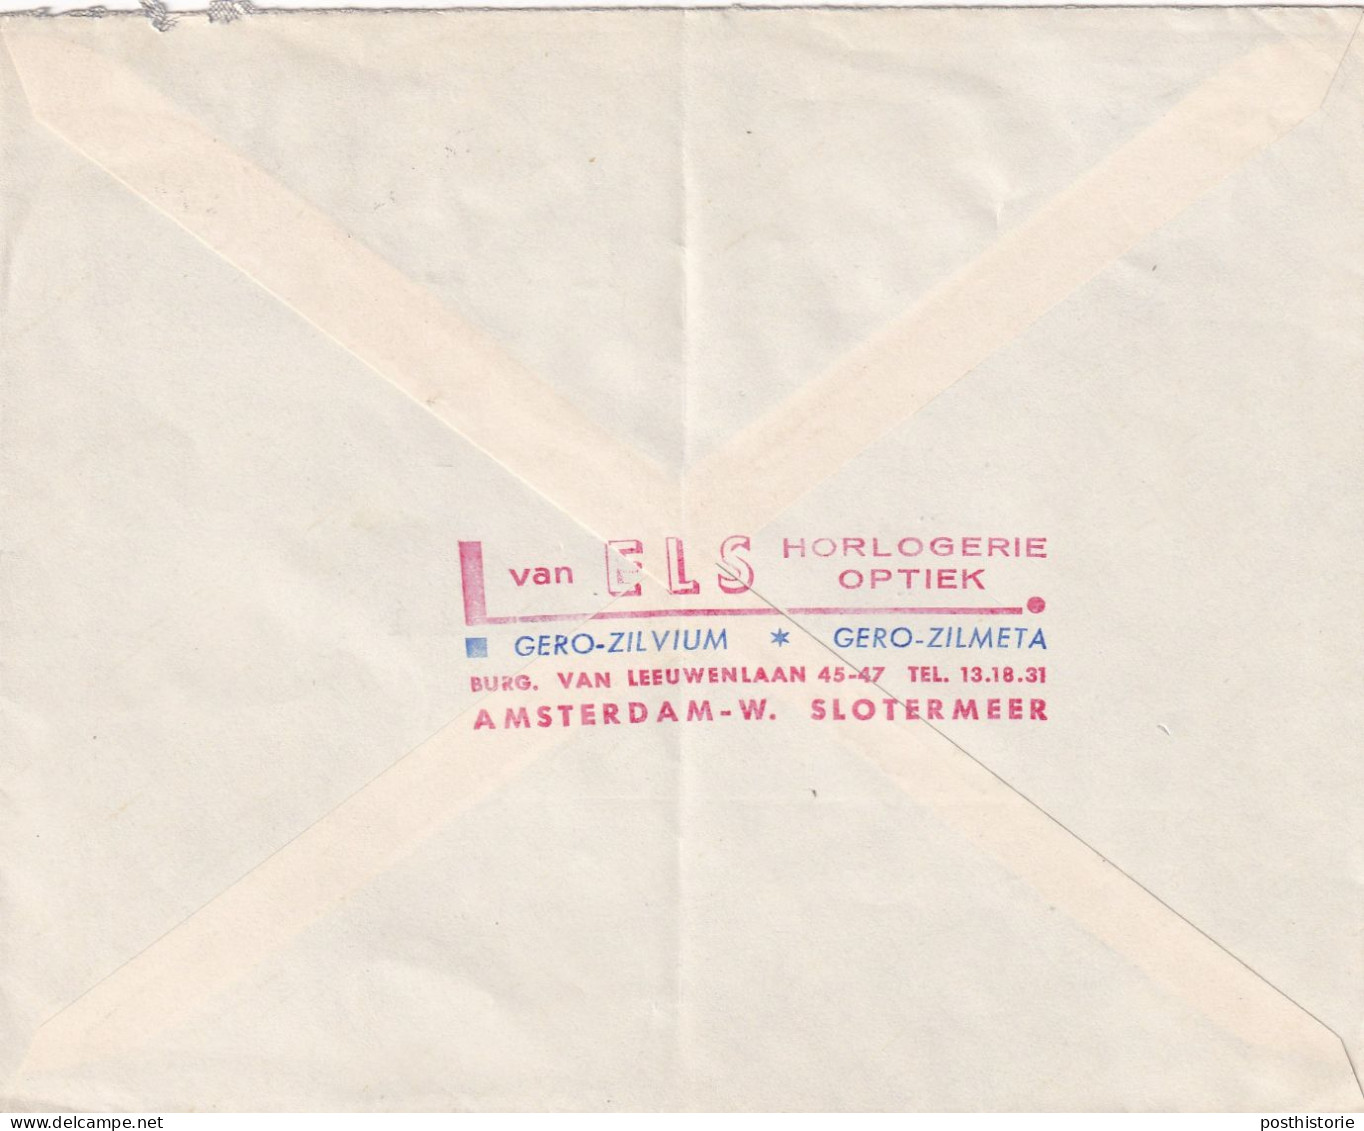 Envelop Met 30 Cent Zomerzegel 1961   Kievit - Lettres & Documents